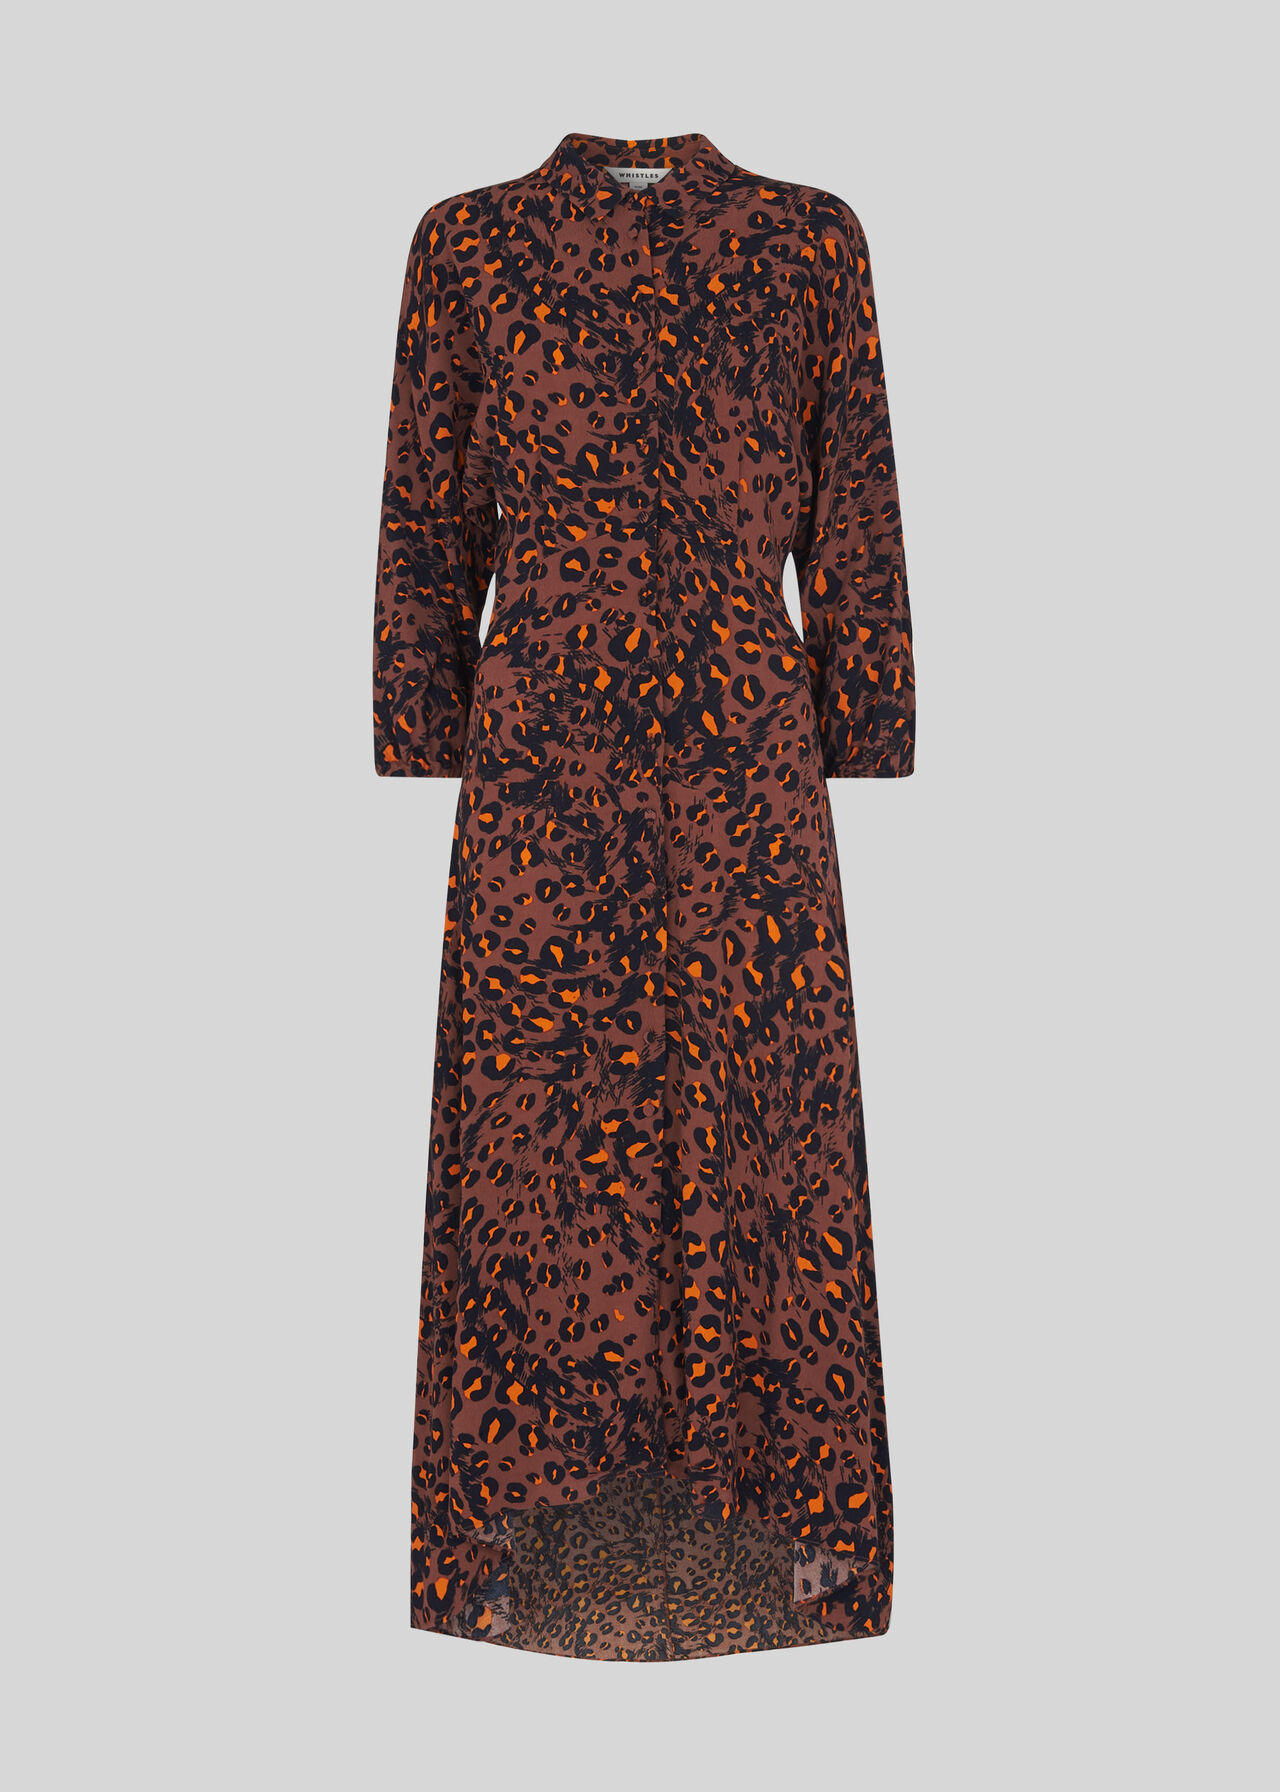 Amara Brushed Leopard Dress Brown/Multi